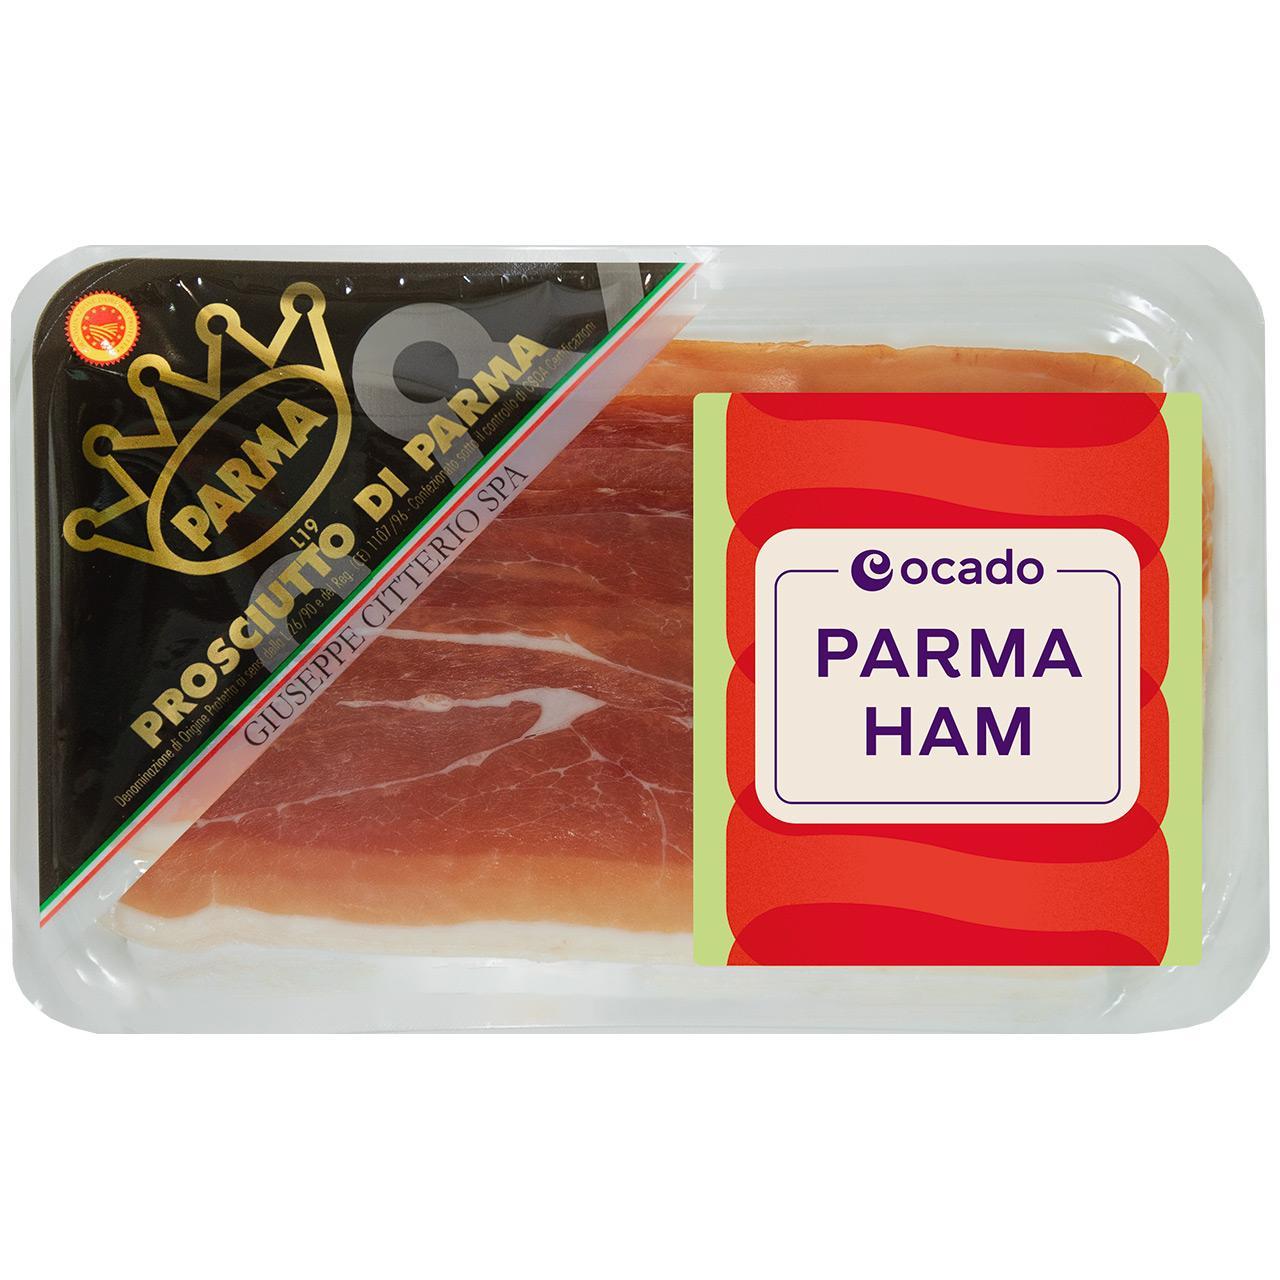 Ocado Parma Ham